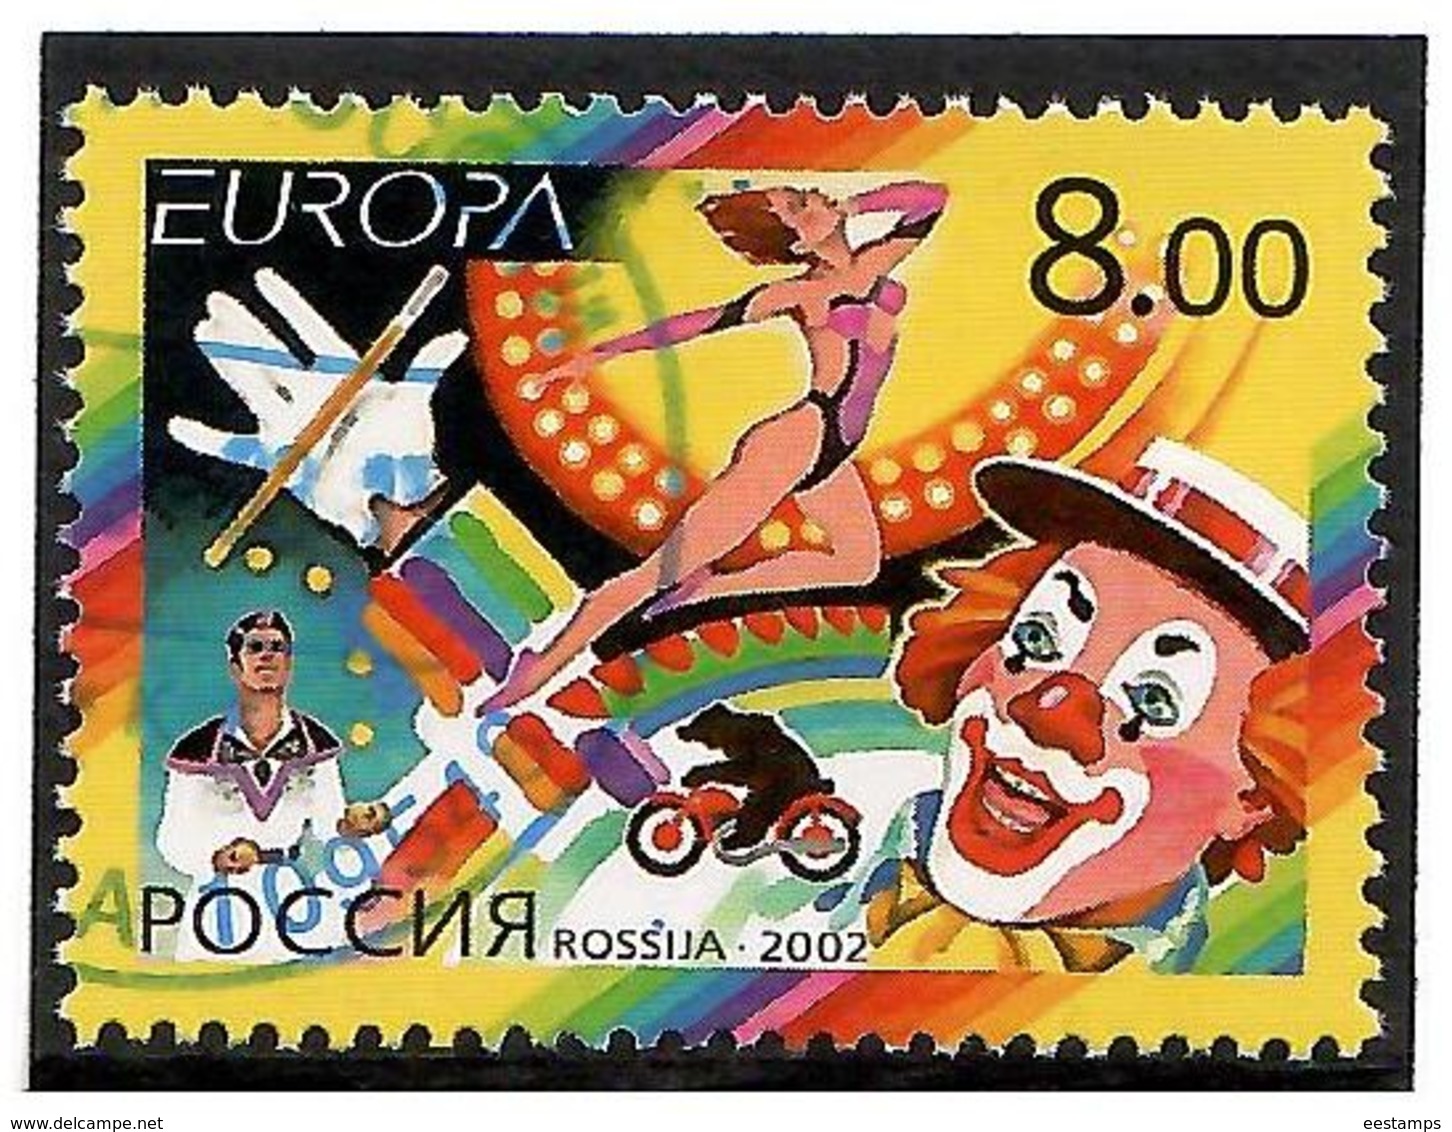 Russia.2002 EUROPA  (Circus). 1v: 8.00   Michel # 987  (oo) - Oblitérés